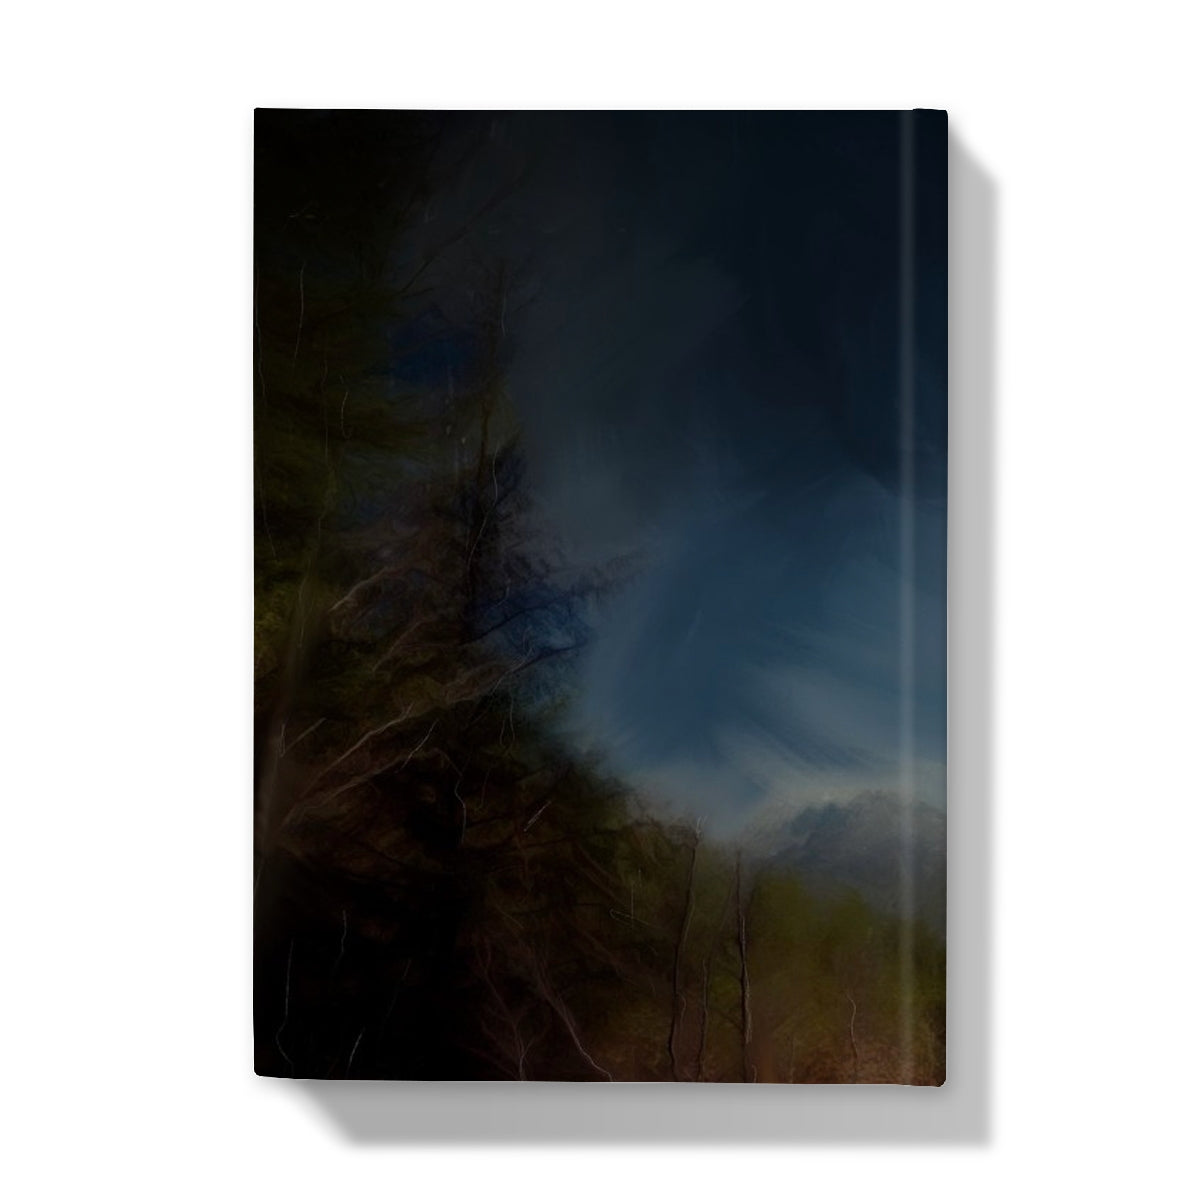 Glencoe Lochan Moonlight Art Gifts Hardback Journal-Journals & Notebooks-Glencoe Art Gallery-Paintings, Prints, Homeware, Art Gifts From Scotland By Scottish Artist Kevin Hunter